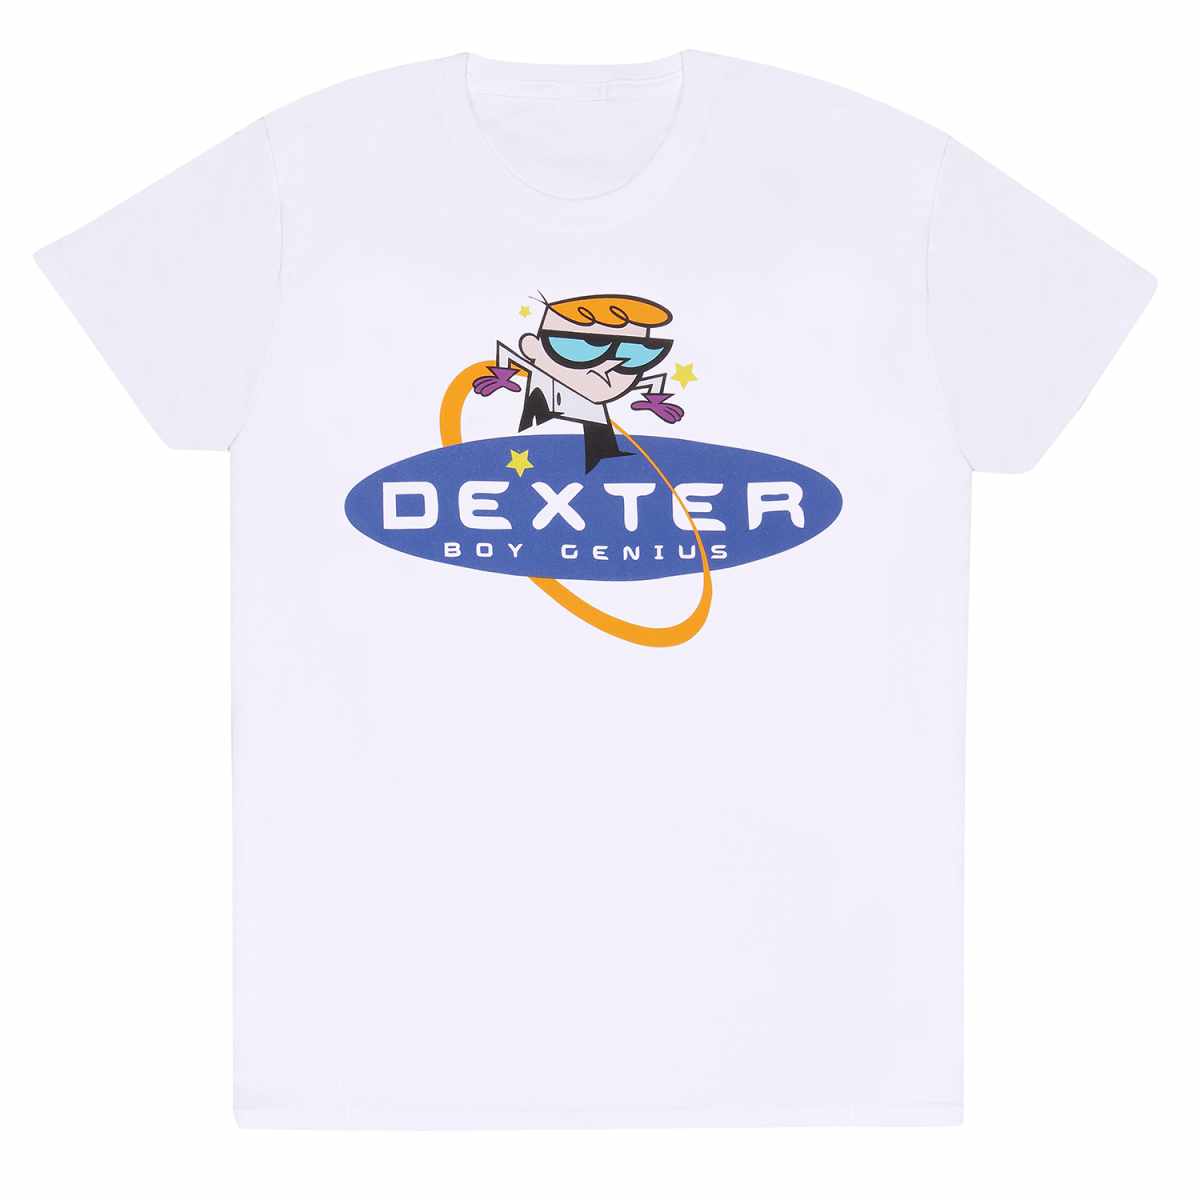 Dexters Laboratory T-Shirt | Boy Genius